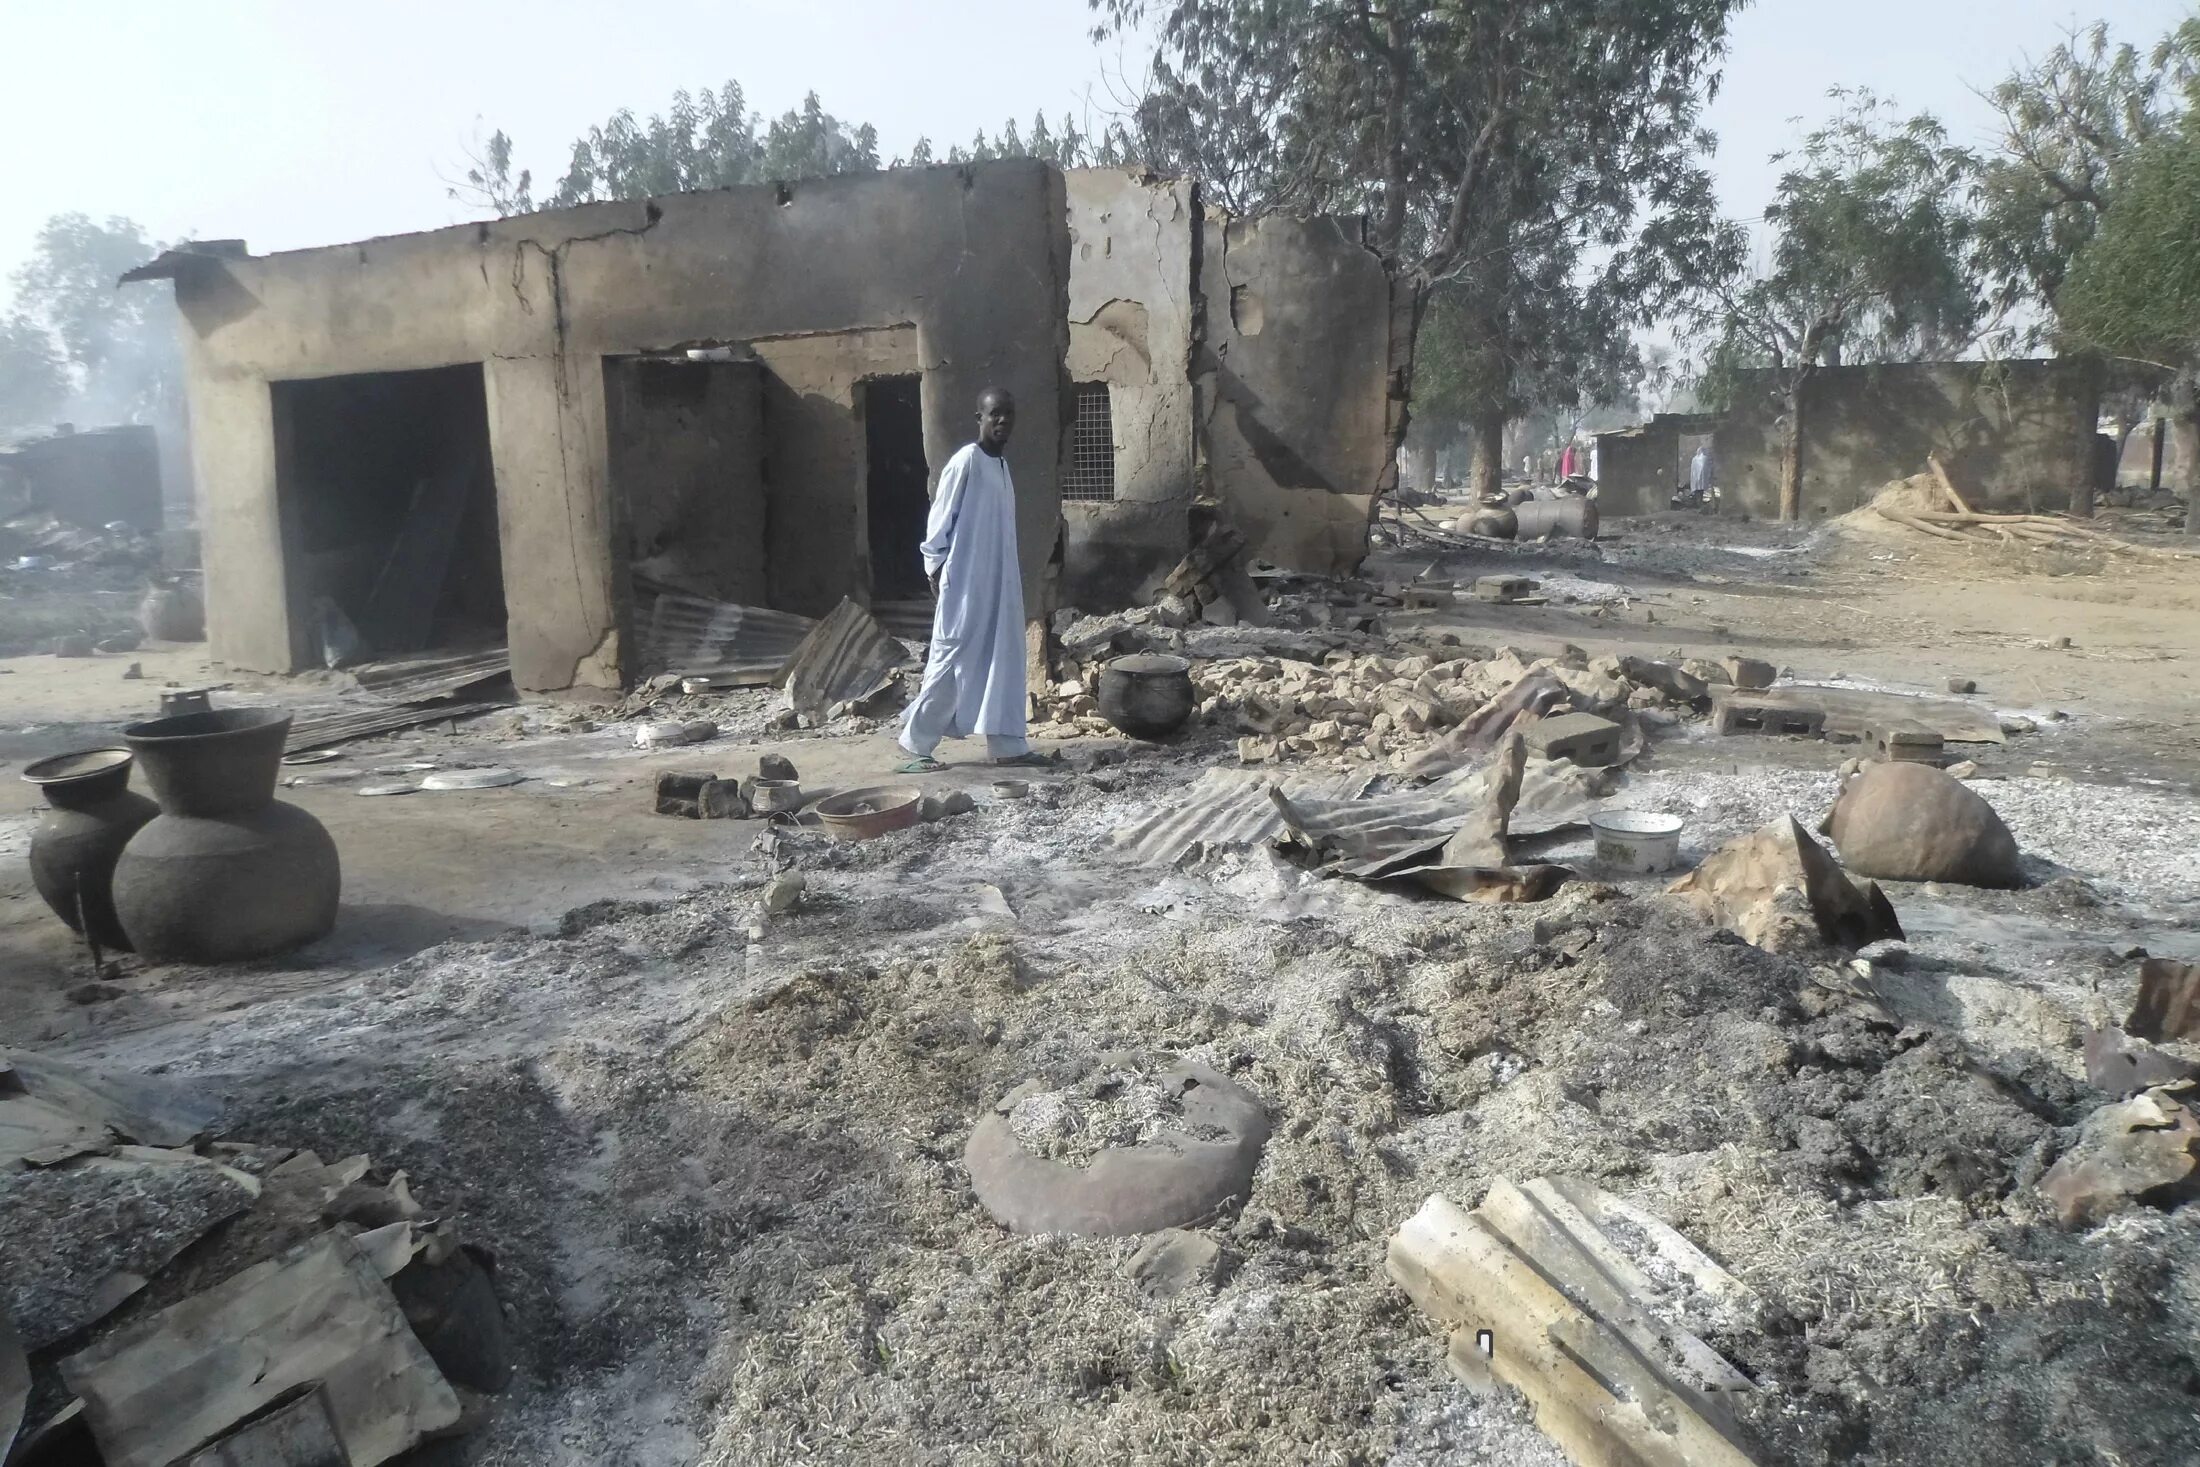 Теракт 2014. Атака Боко-харам в Нигерии. Более 300 погибших. Атака Боко-харам в Нигерии теракт. Атака Боко-харам в Нигерии 5-6 мая 2014. Атака Боко-харам 6 мая 2014.